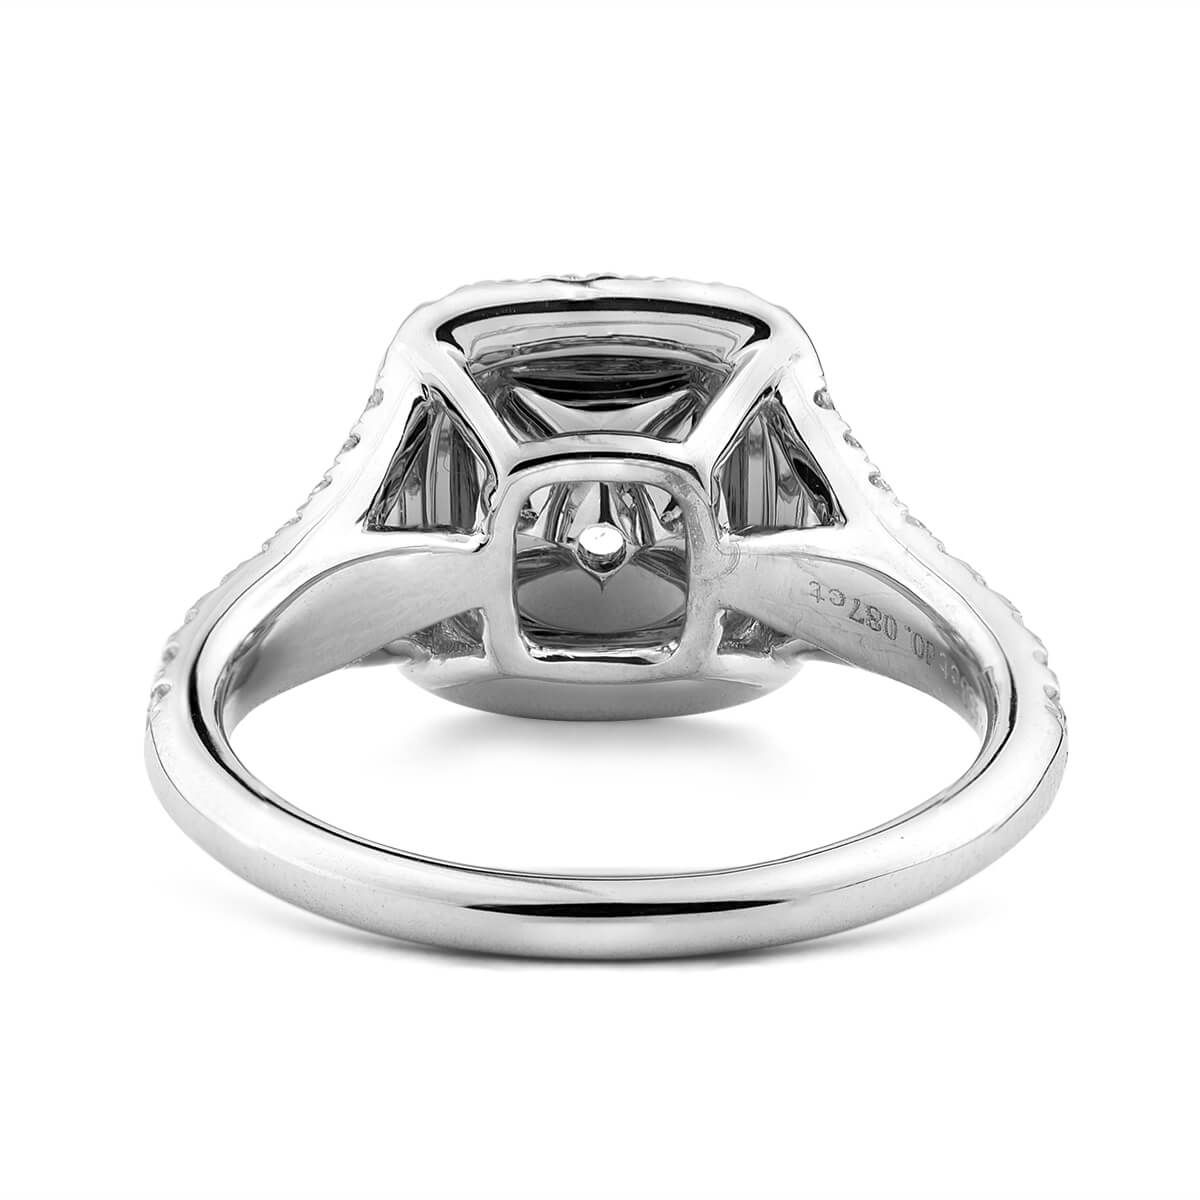 Light Yellow Green Diamond Ring, 1.22 Ct. (1.74 Ct. TW), Cushion shape, GIA Certified, 2183610683